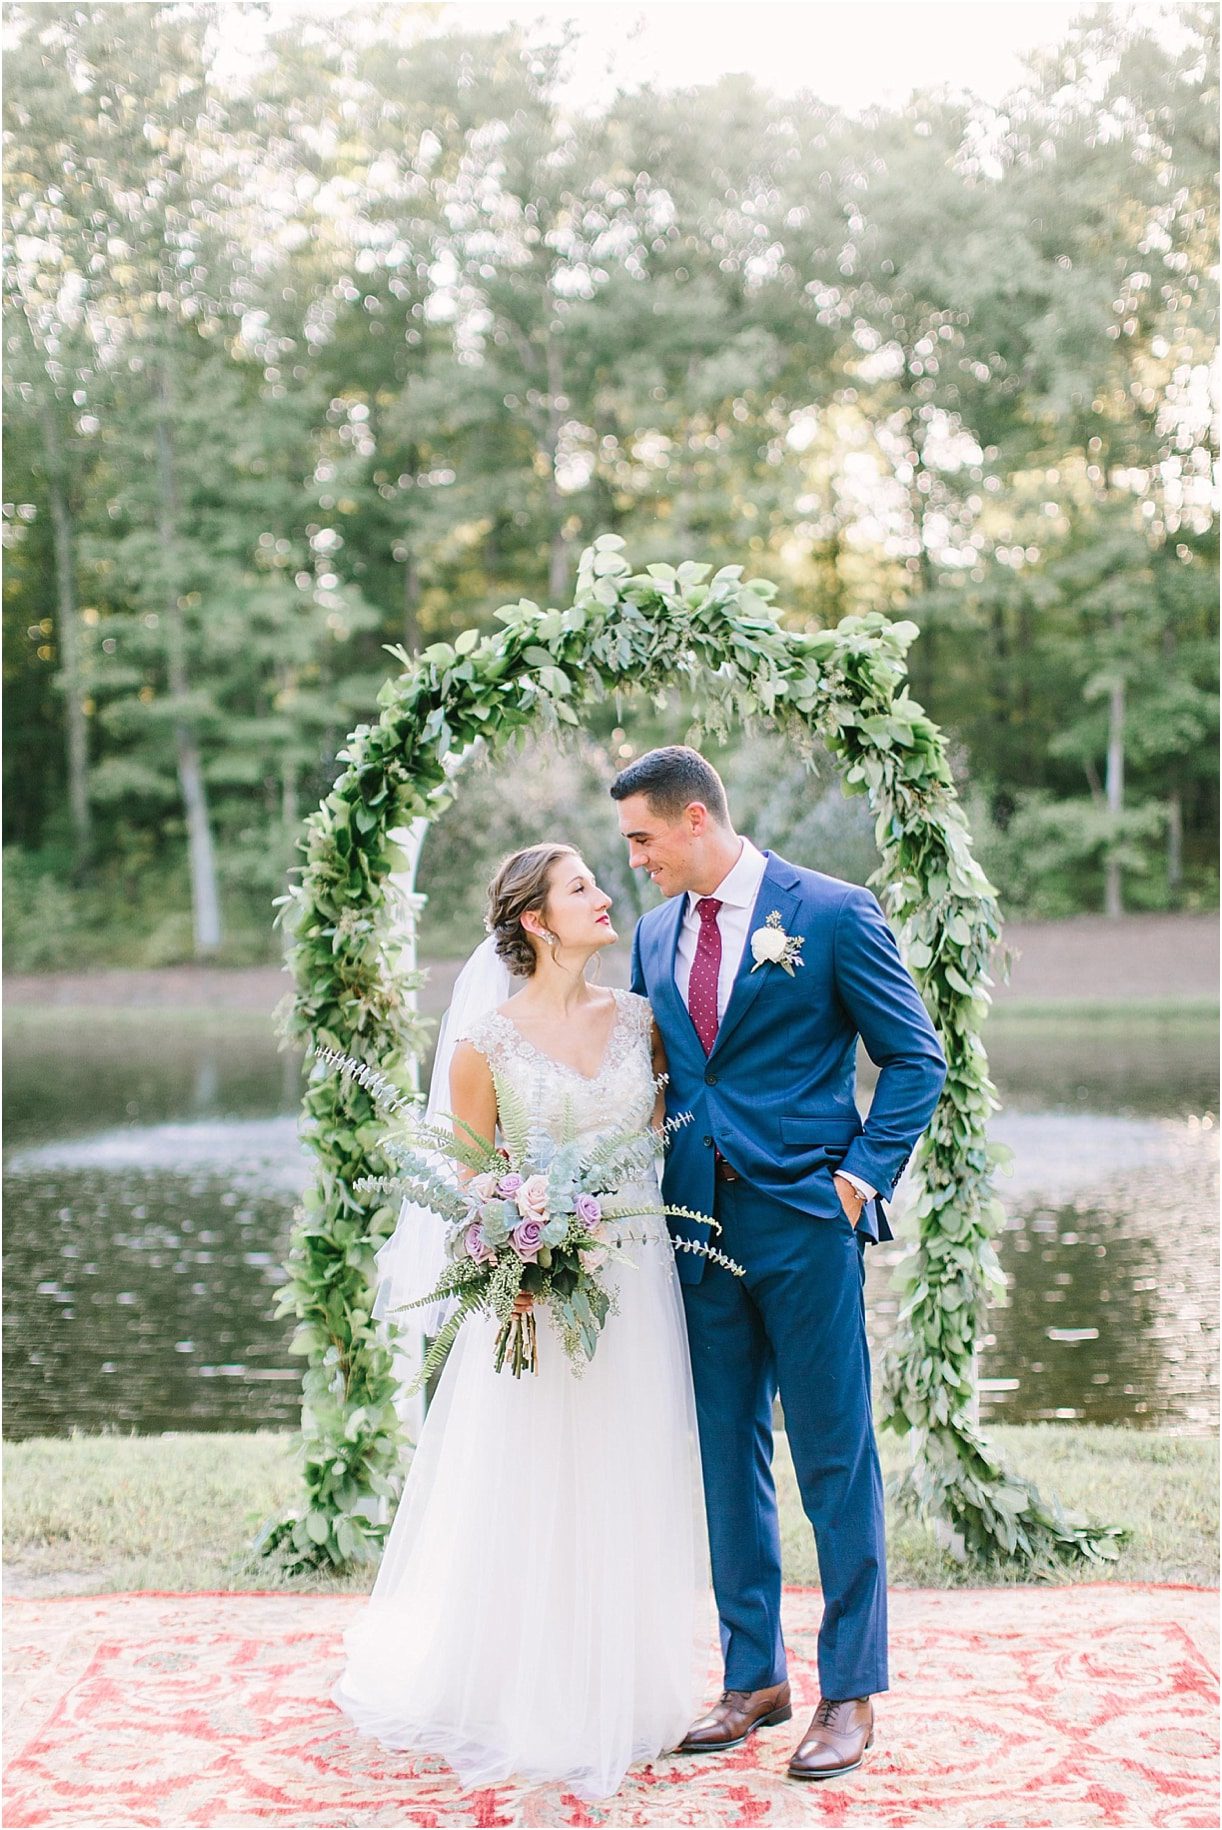 Outdoor Summer Wedding with Lavender Details | Hill City Bride Virginia Wedding Blog